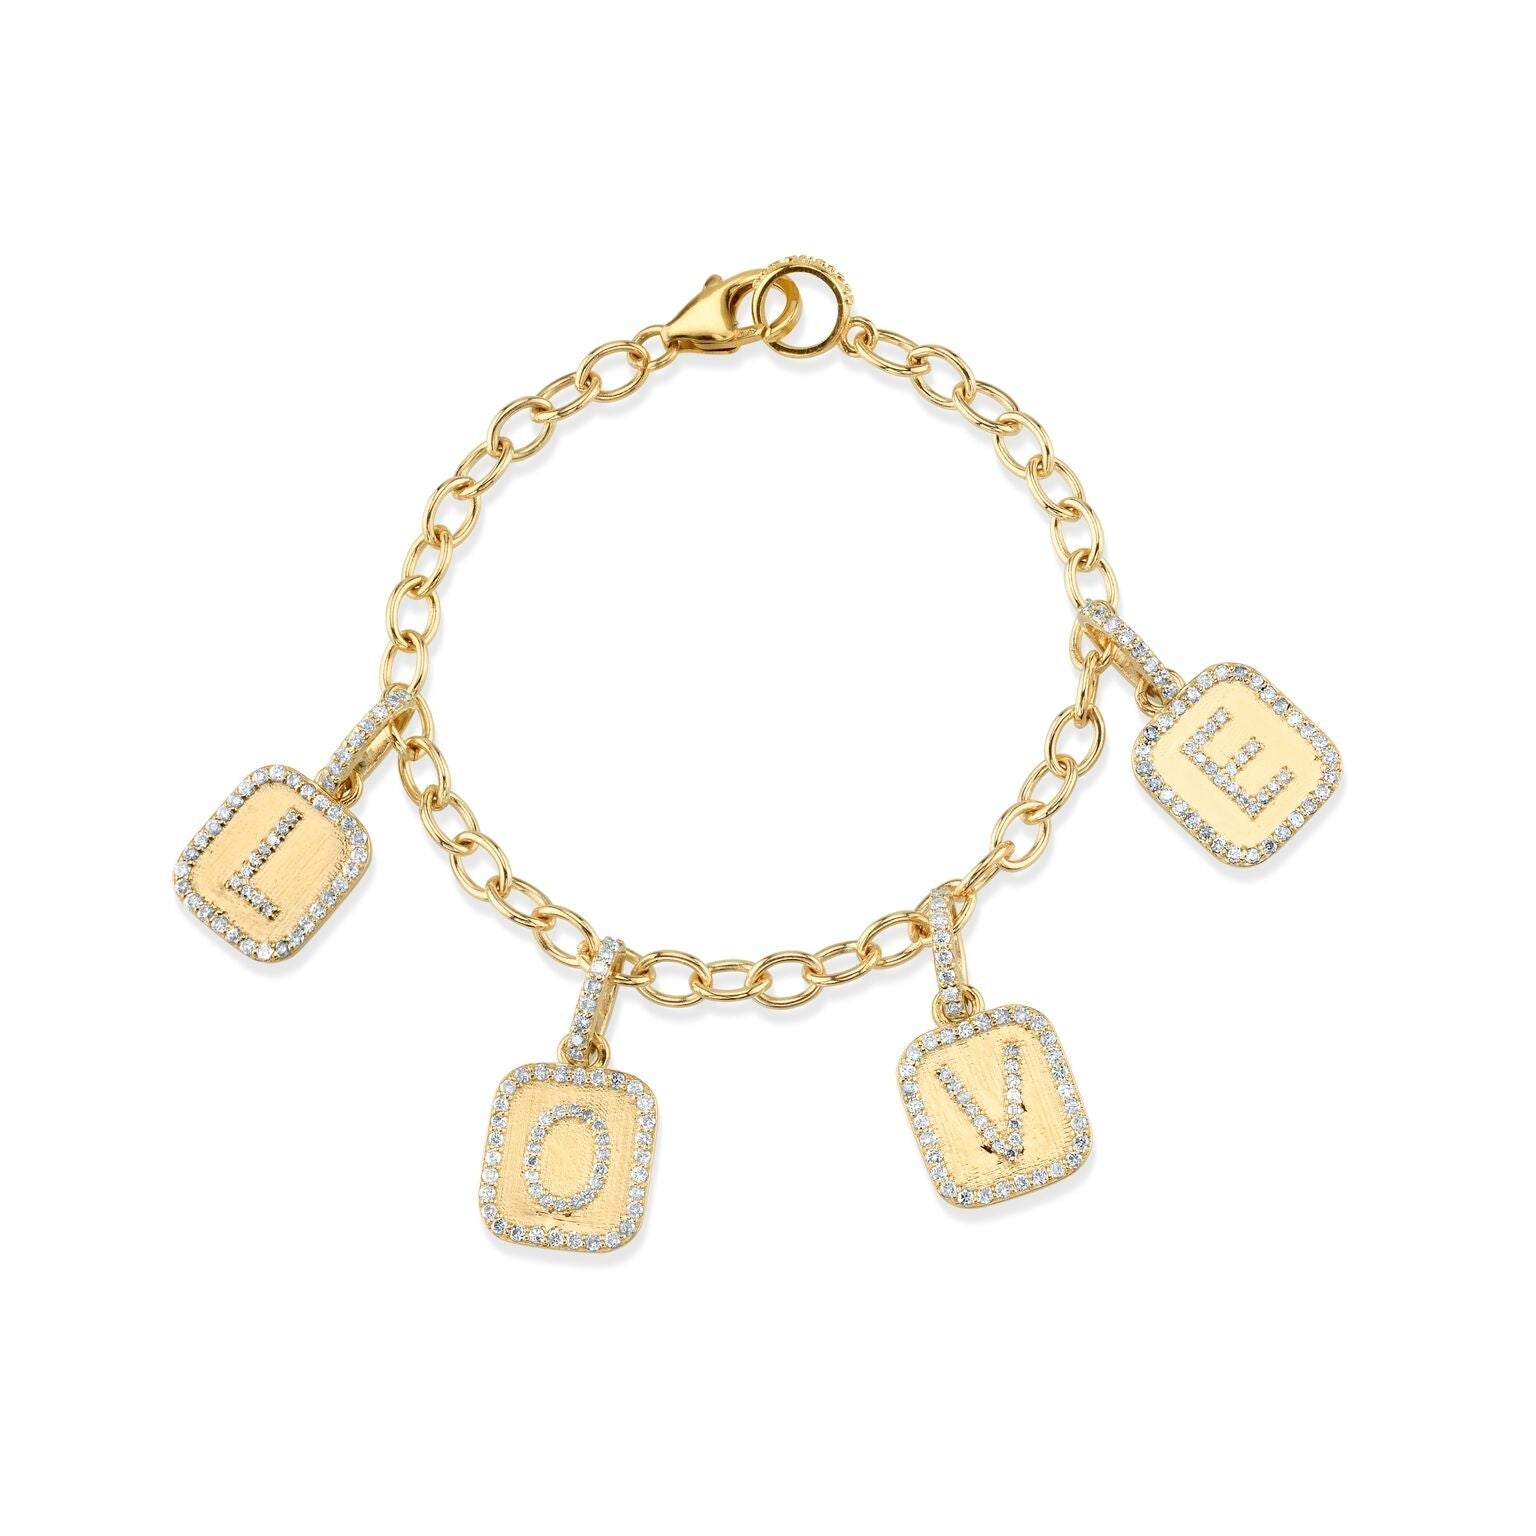 14K Gold LOVE Link Chain Bracelet with Diamond Letter Charms  BG000416 - TBird